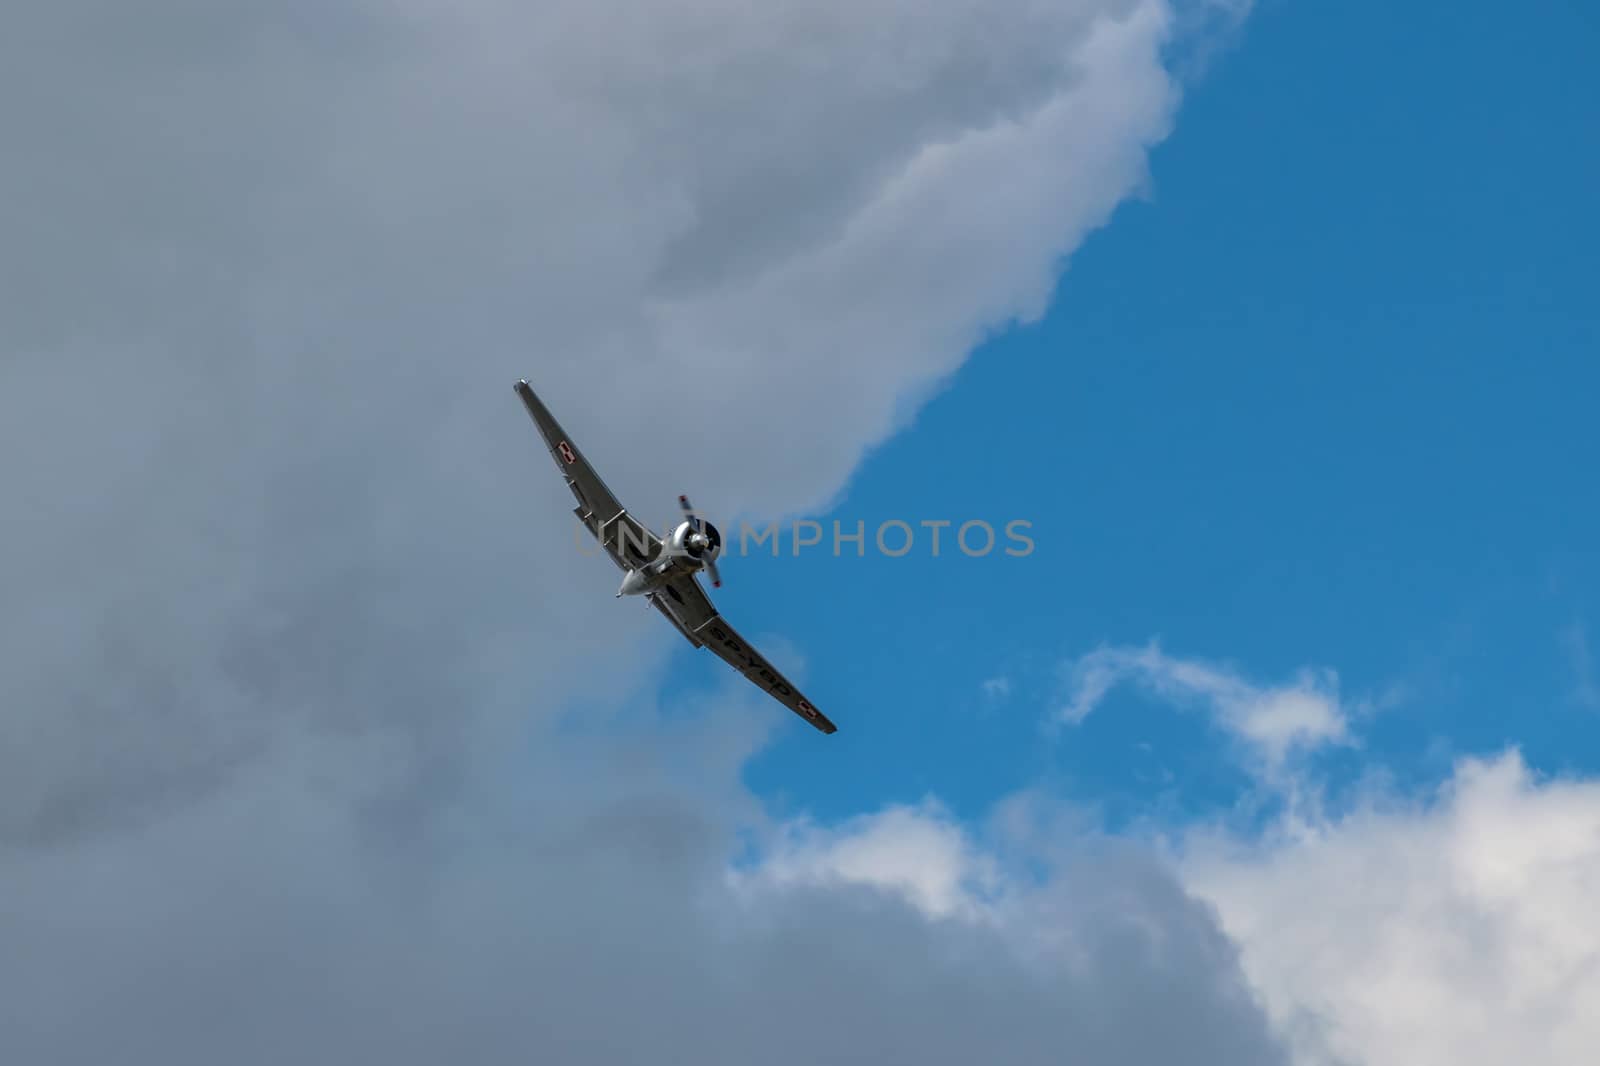 TS-8 "Bies" historical aircraft flying during Radom Air Show 201 by Attila